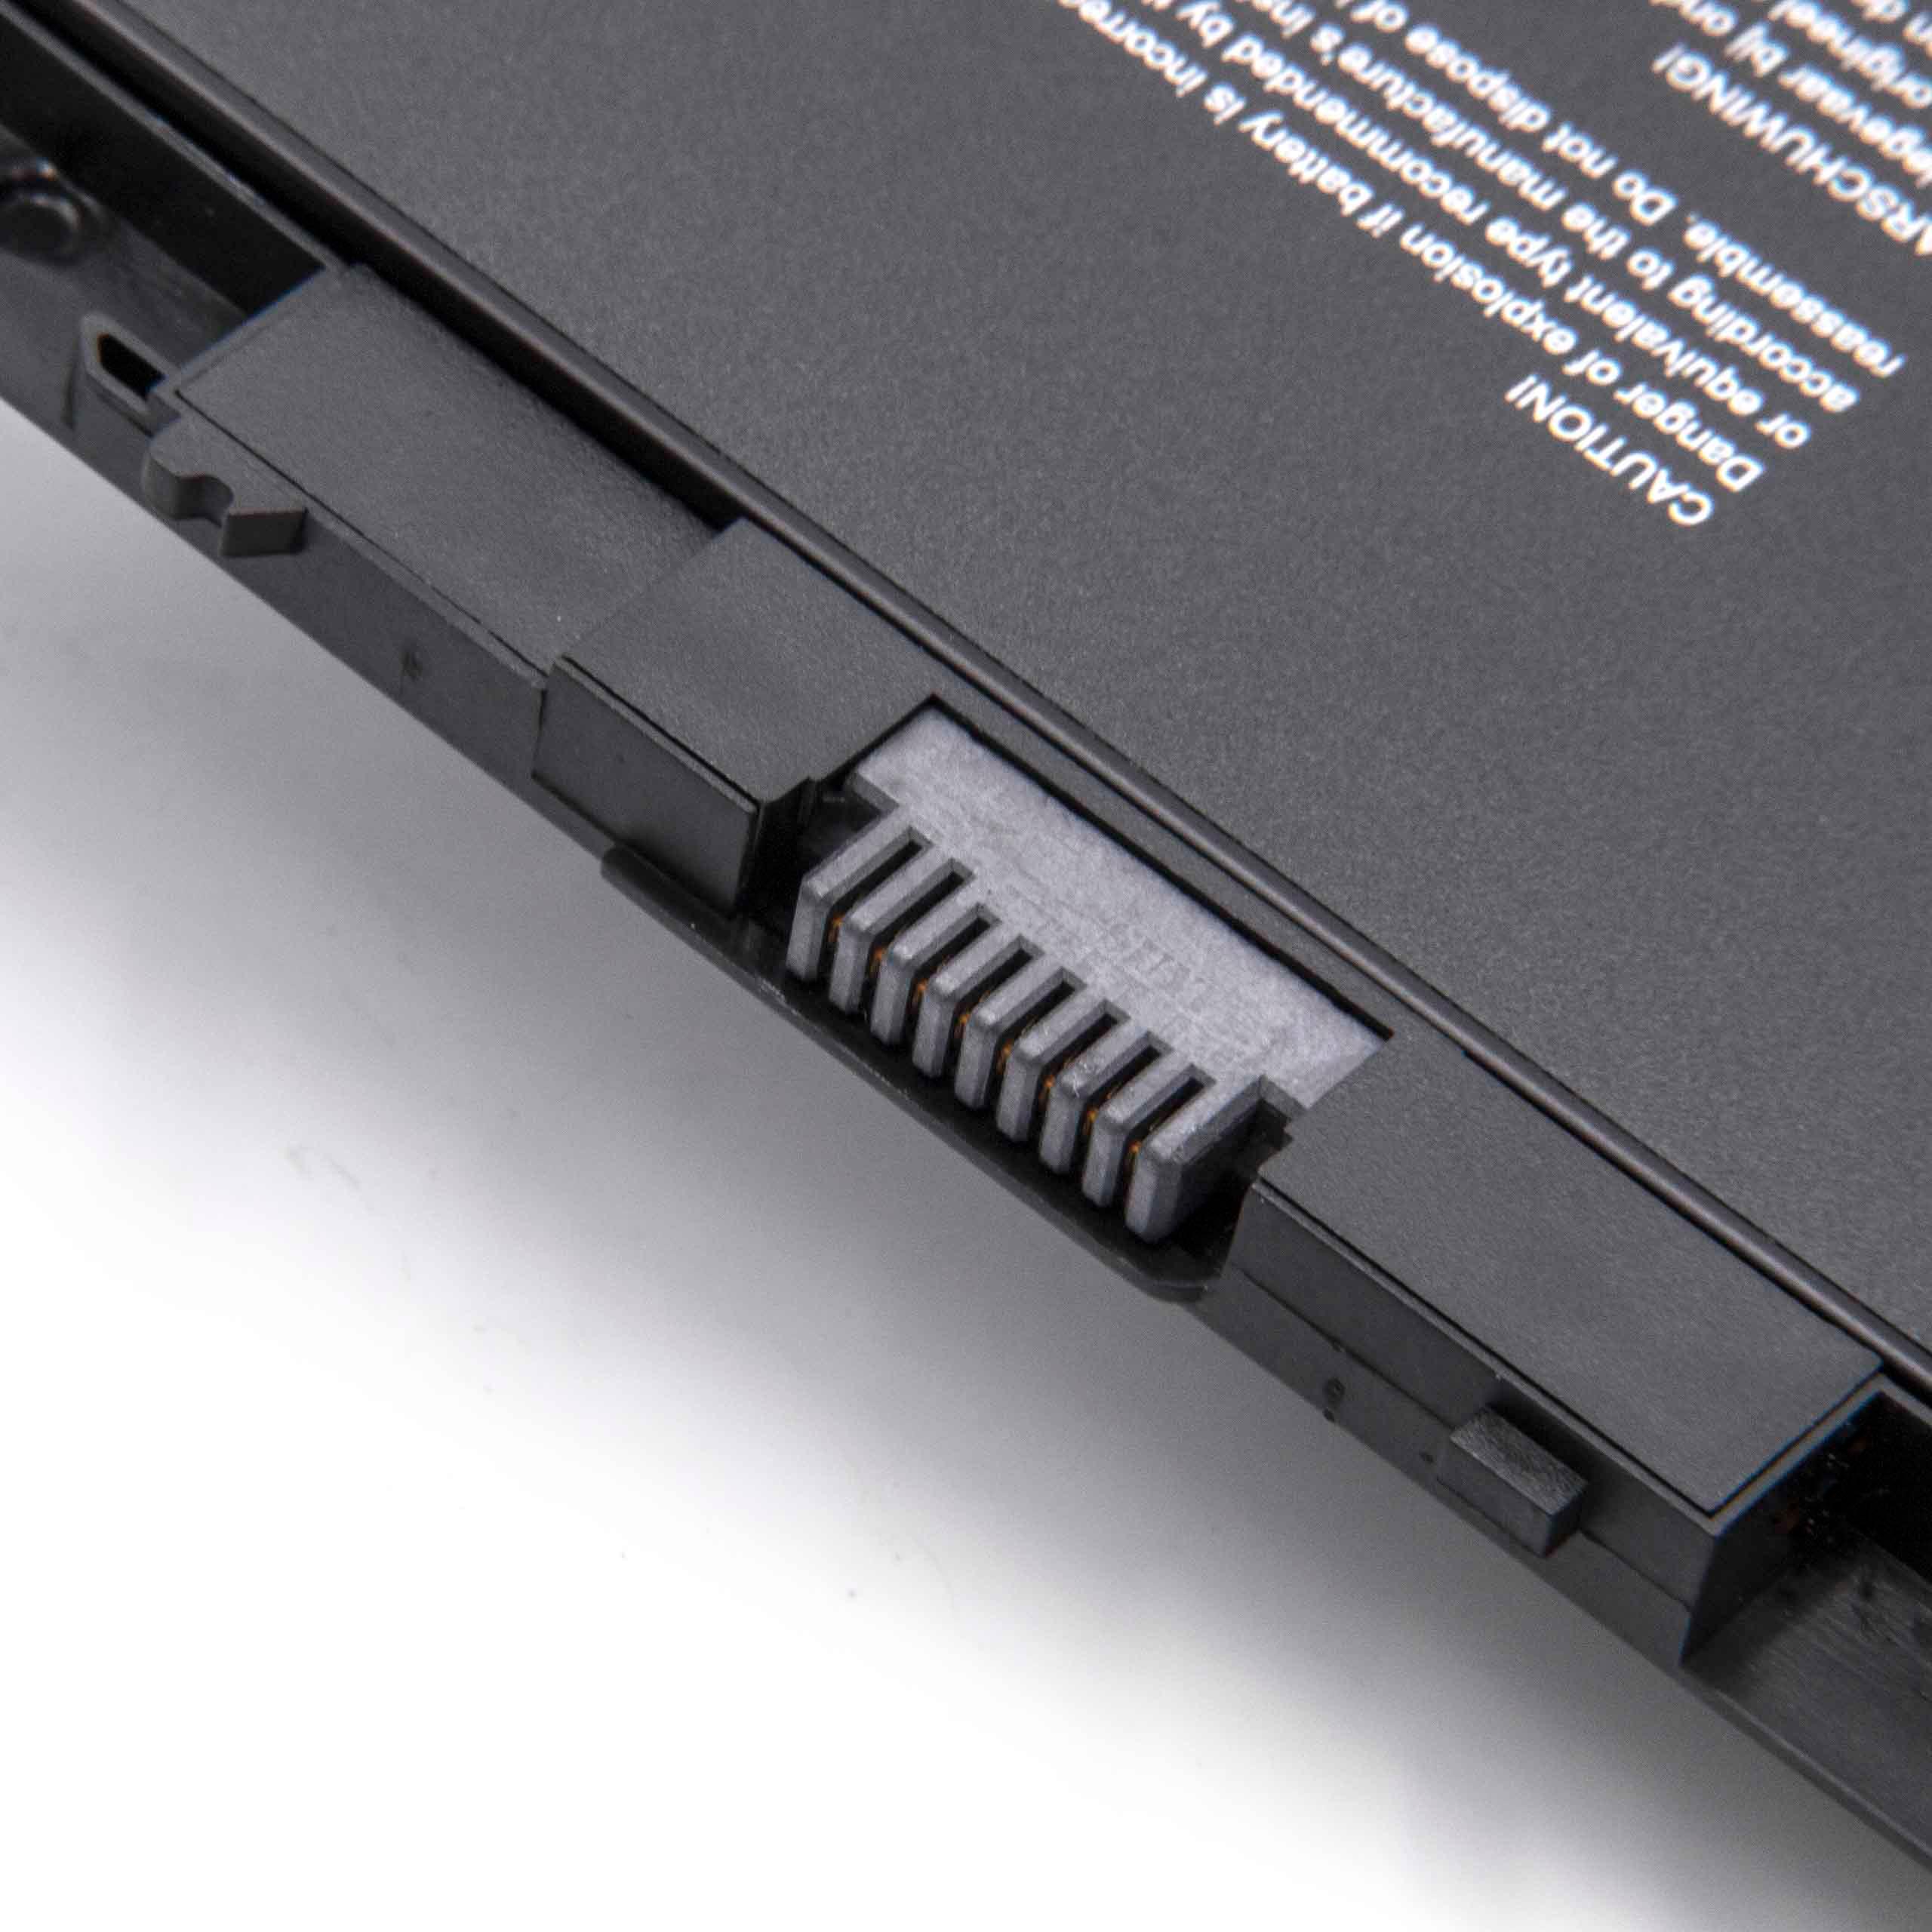 Akumulator do laptopa zamiennik HP 687517-171, 687517-241, 687517-1C1 - 3500 mAh 14,8 V LiPo, czarny